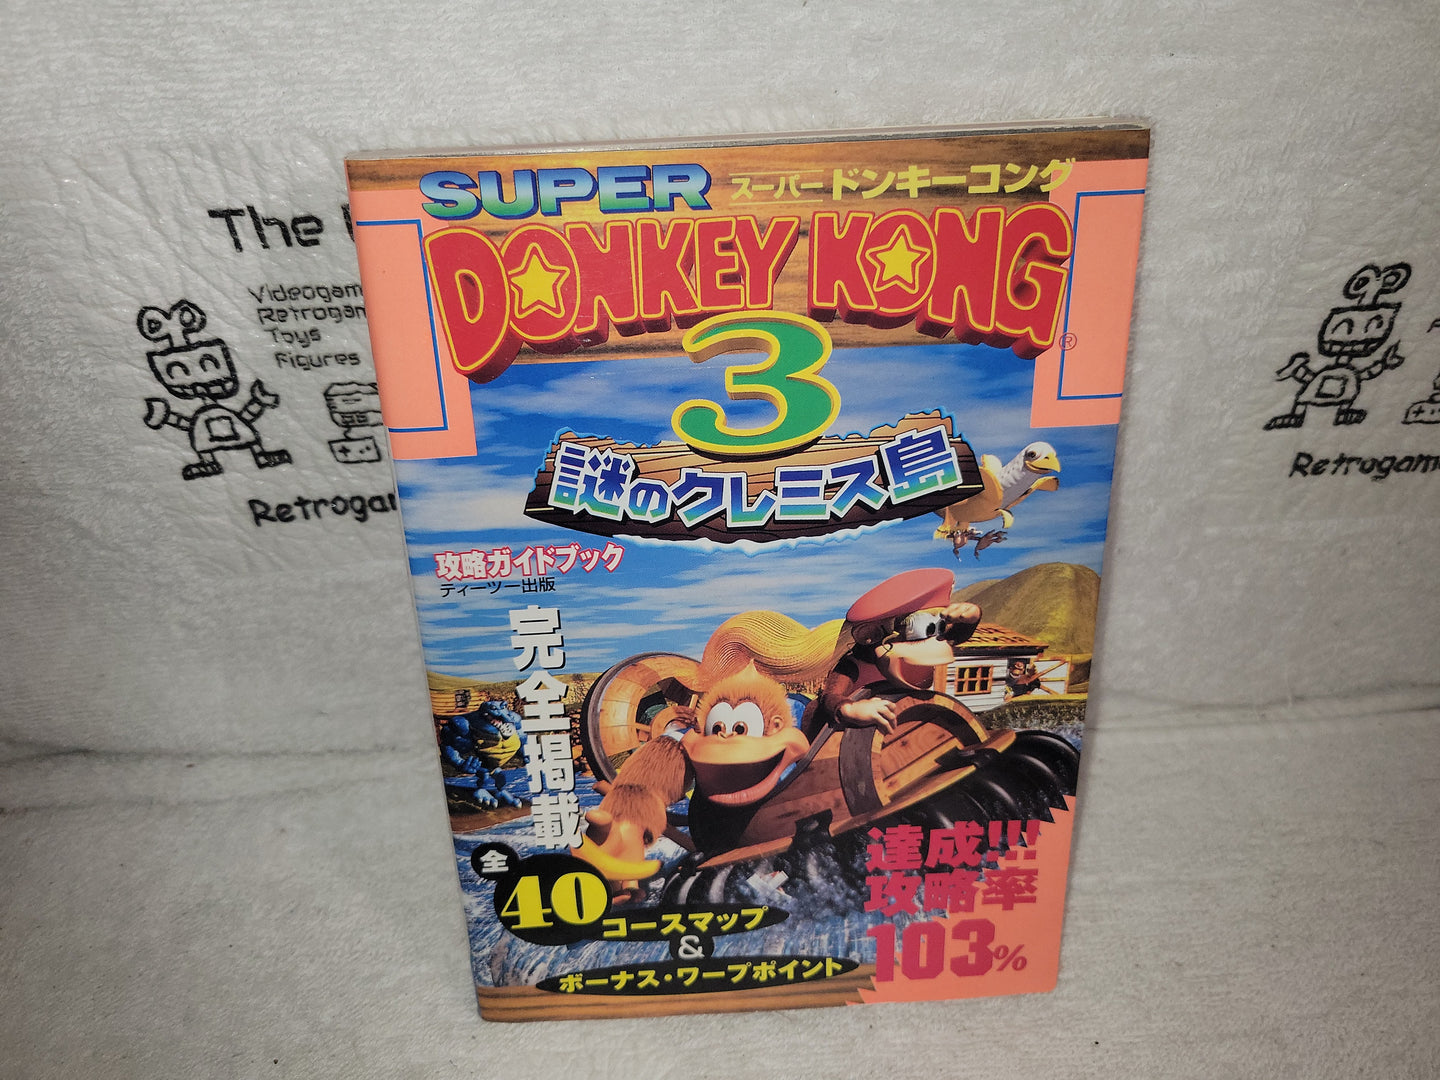 Super Donkey kong 3 - guide book MOOK